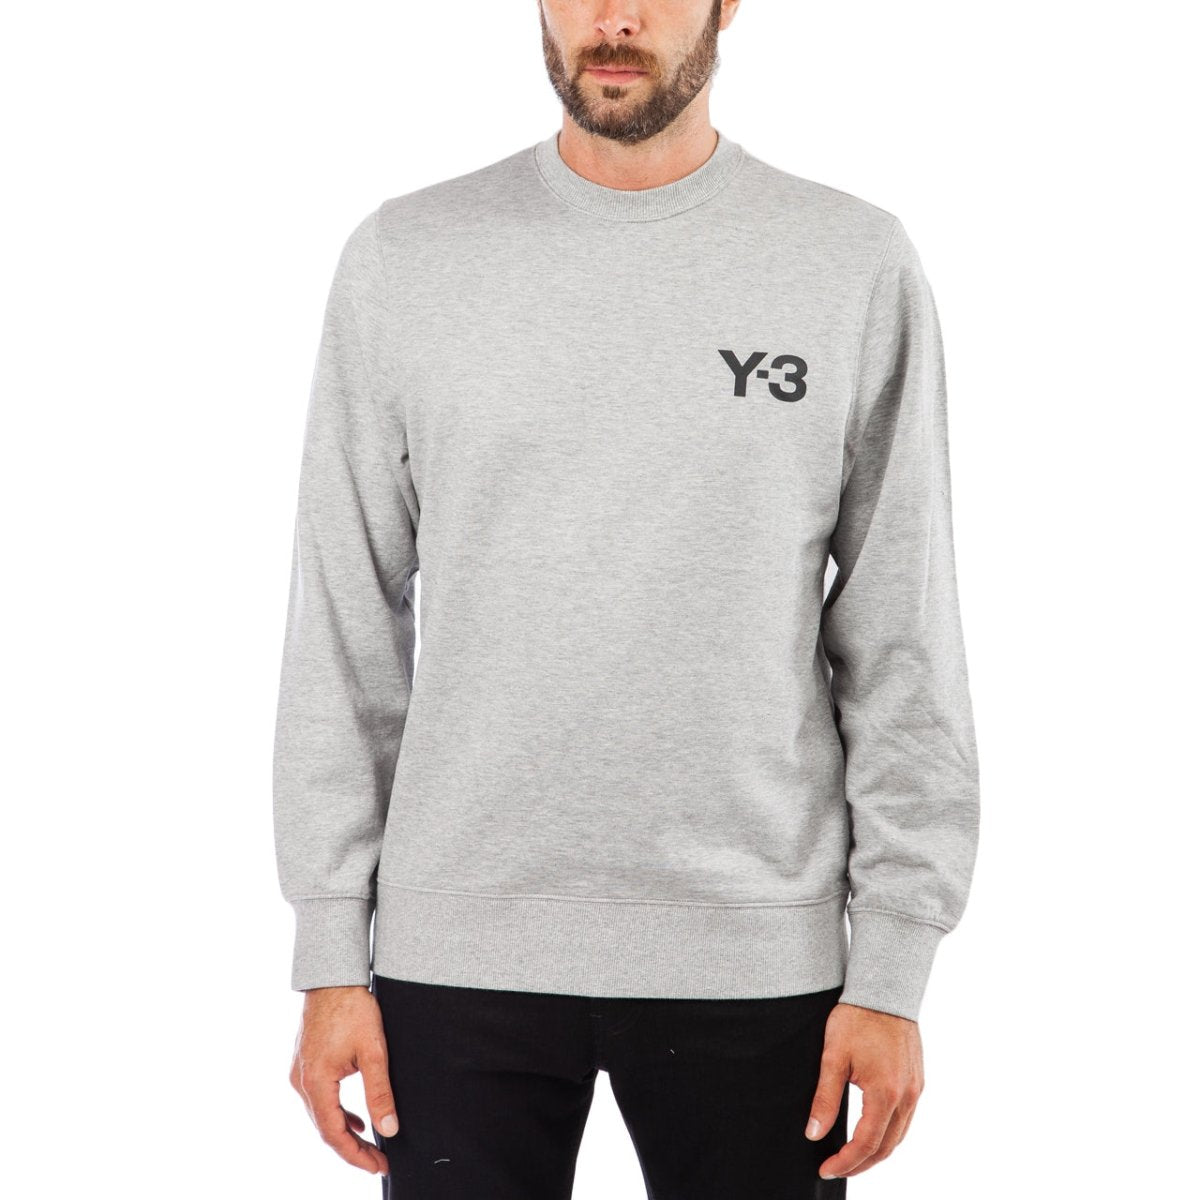 Y-3 Classic Longsleeve T-Shirt (Grau)  - Allike Store